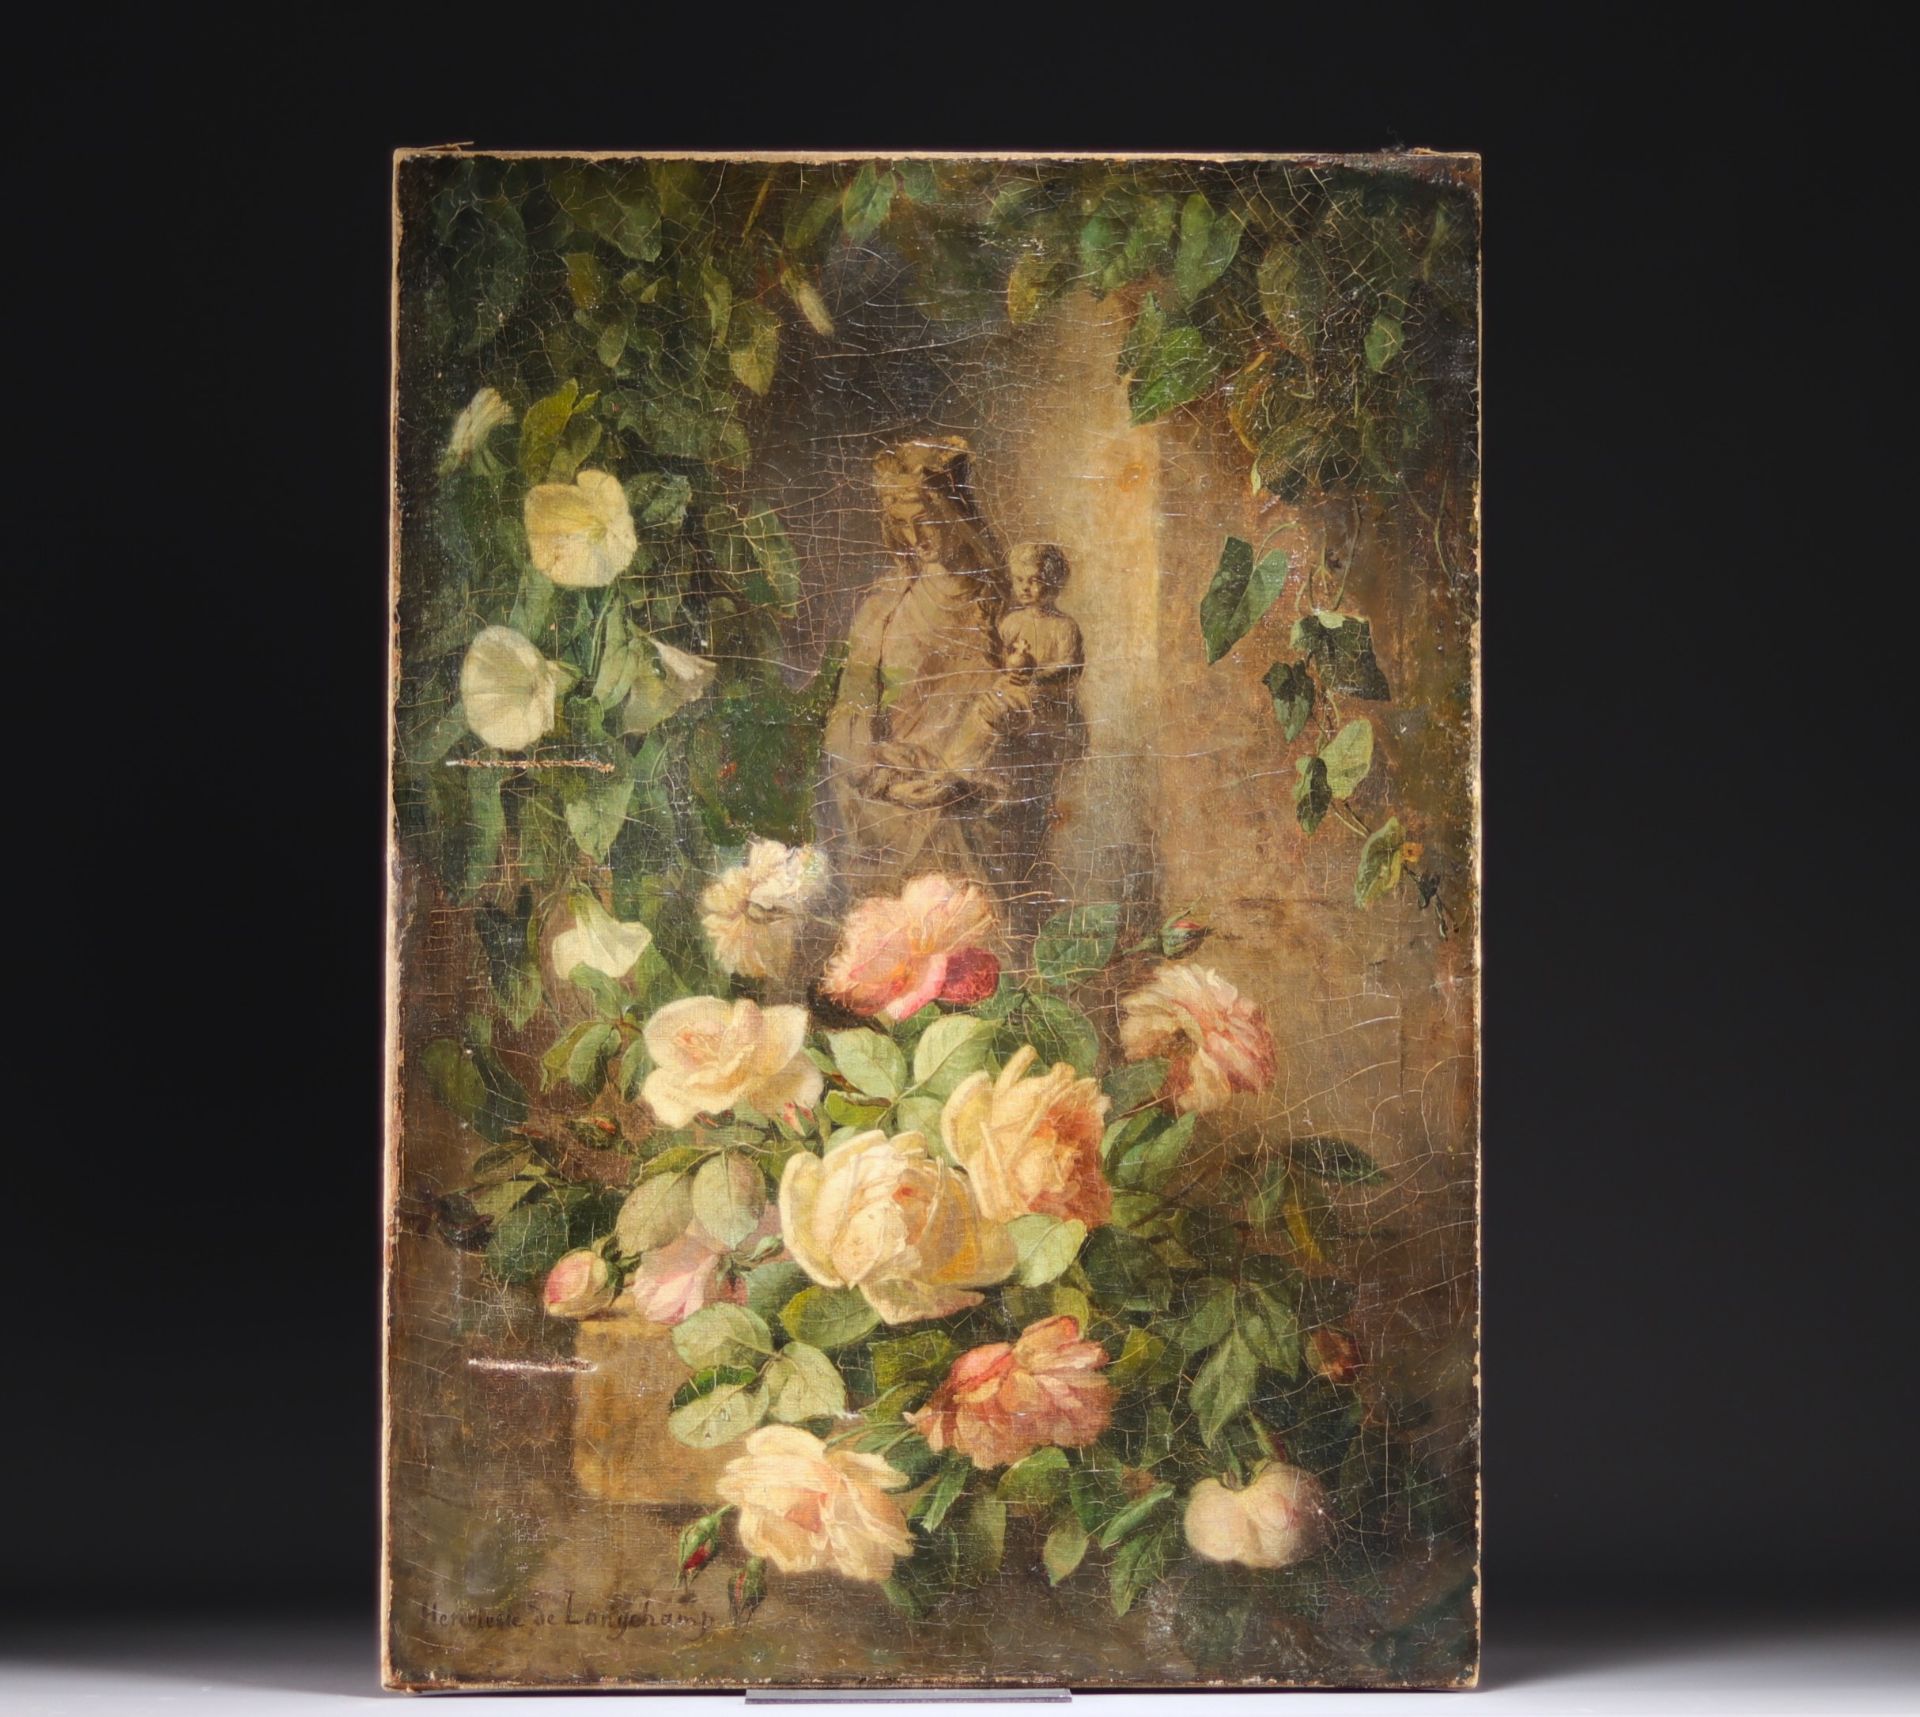 Henriette de LONGCHAMP (1818-?) - "Still life with flowers and a saint" Oil on canvas, 19th century.